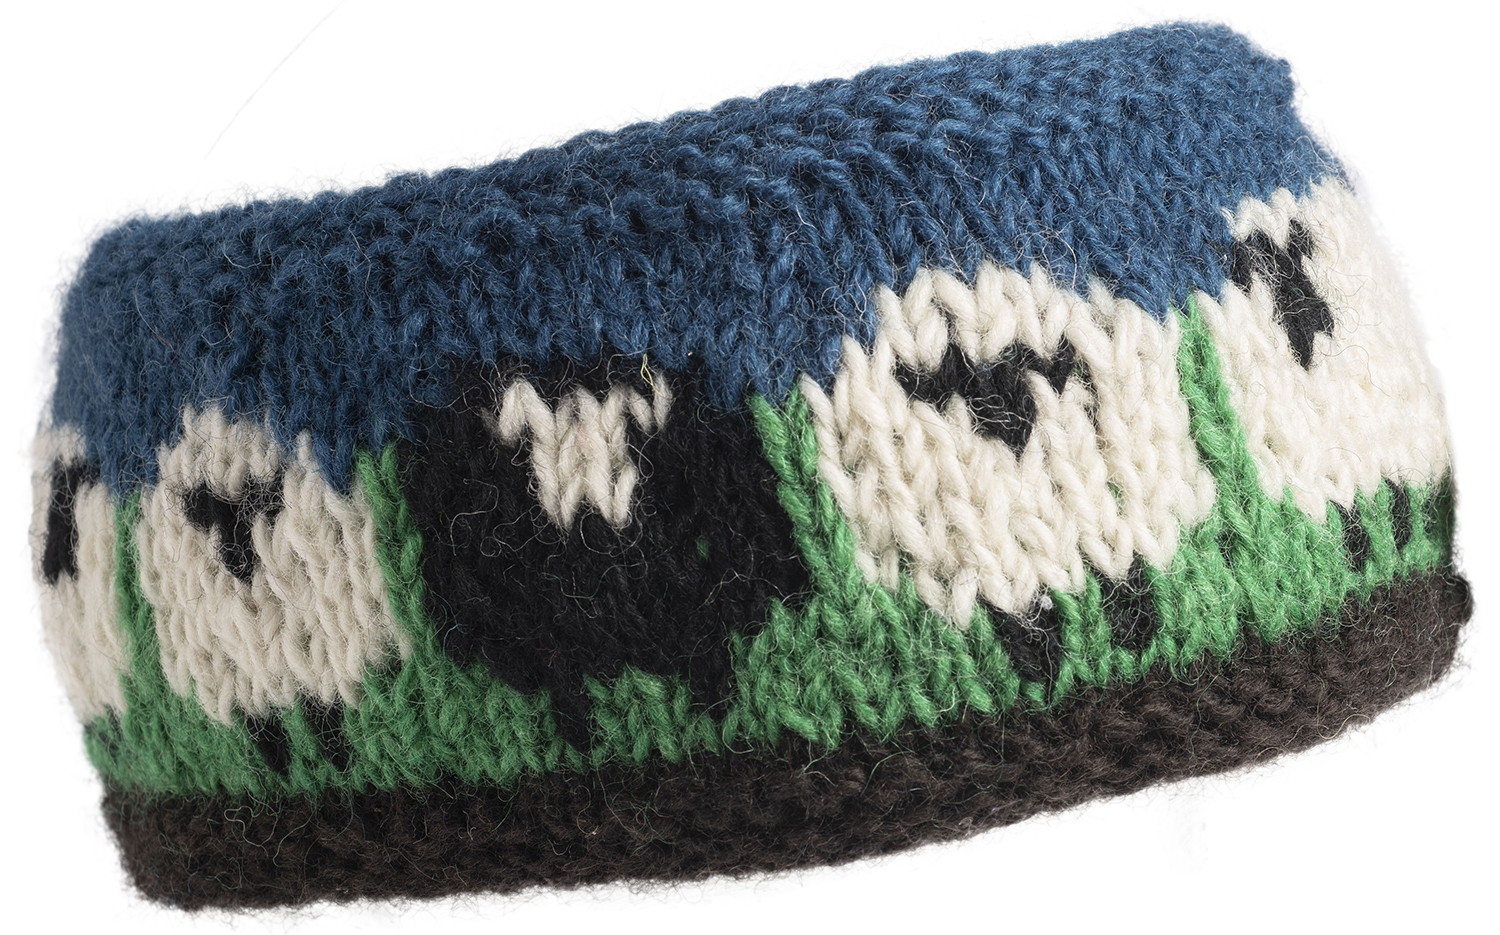 Women's Fair Trade Hand Knitted Headband Ear Warmer Winter Sheep Design